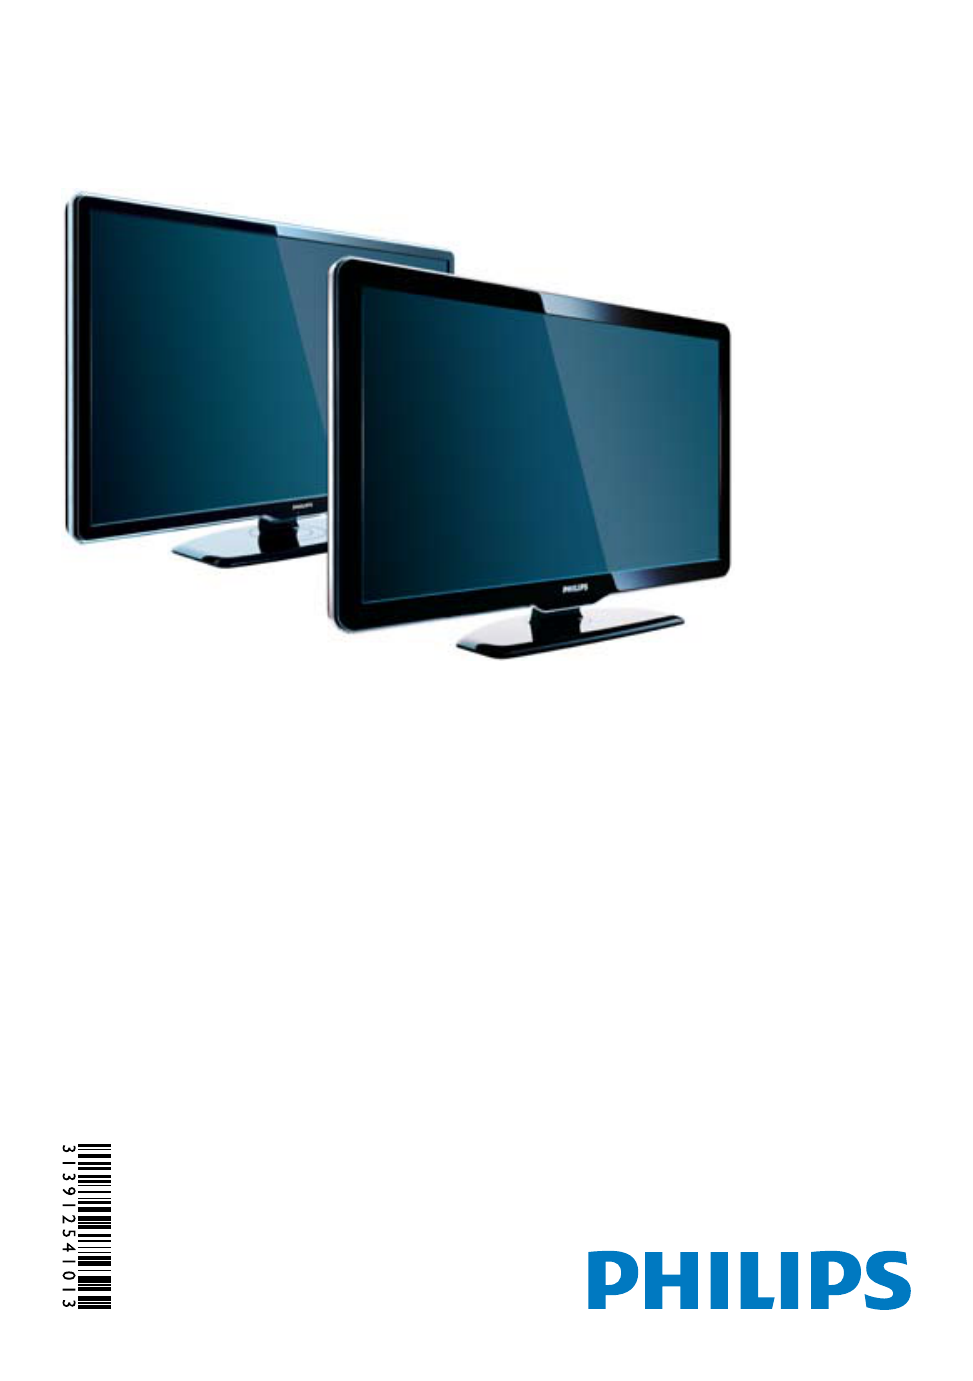 User Manual For 65 Philips Smart Tv - plusmint